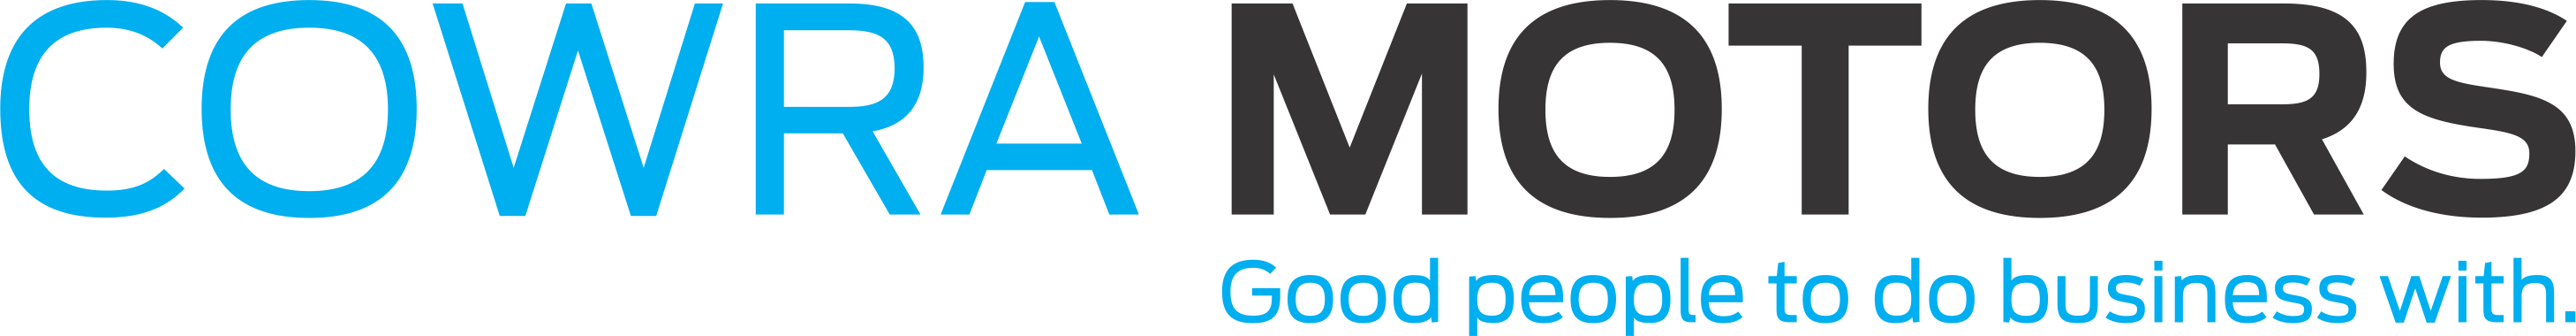 Cowra Motors logo